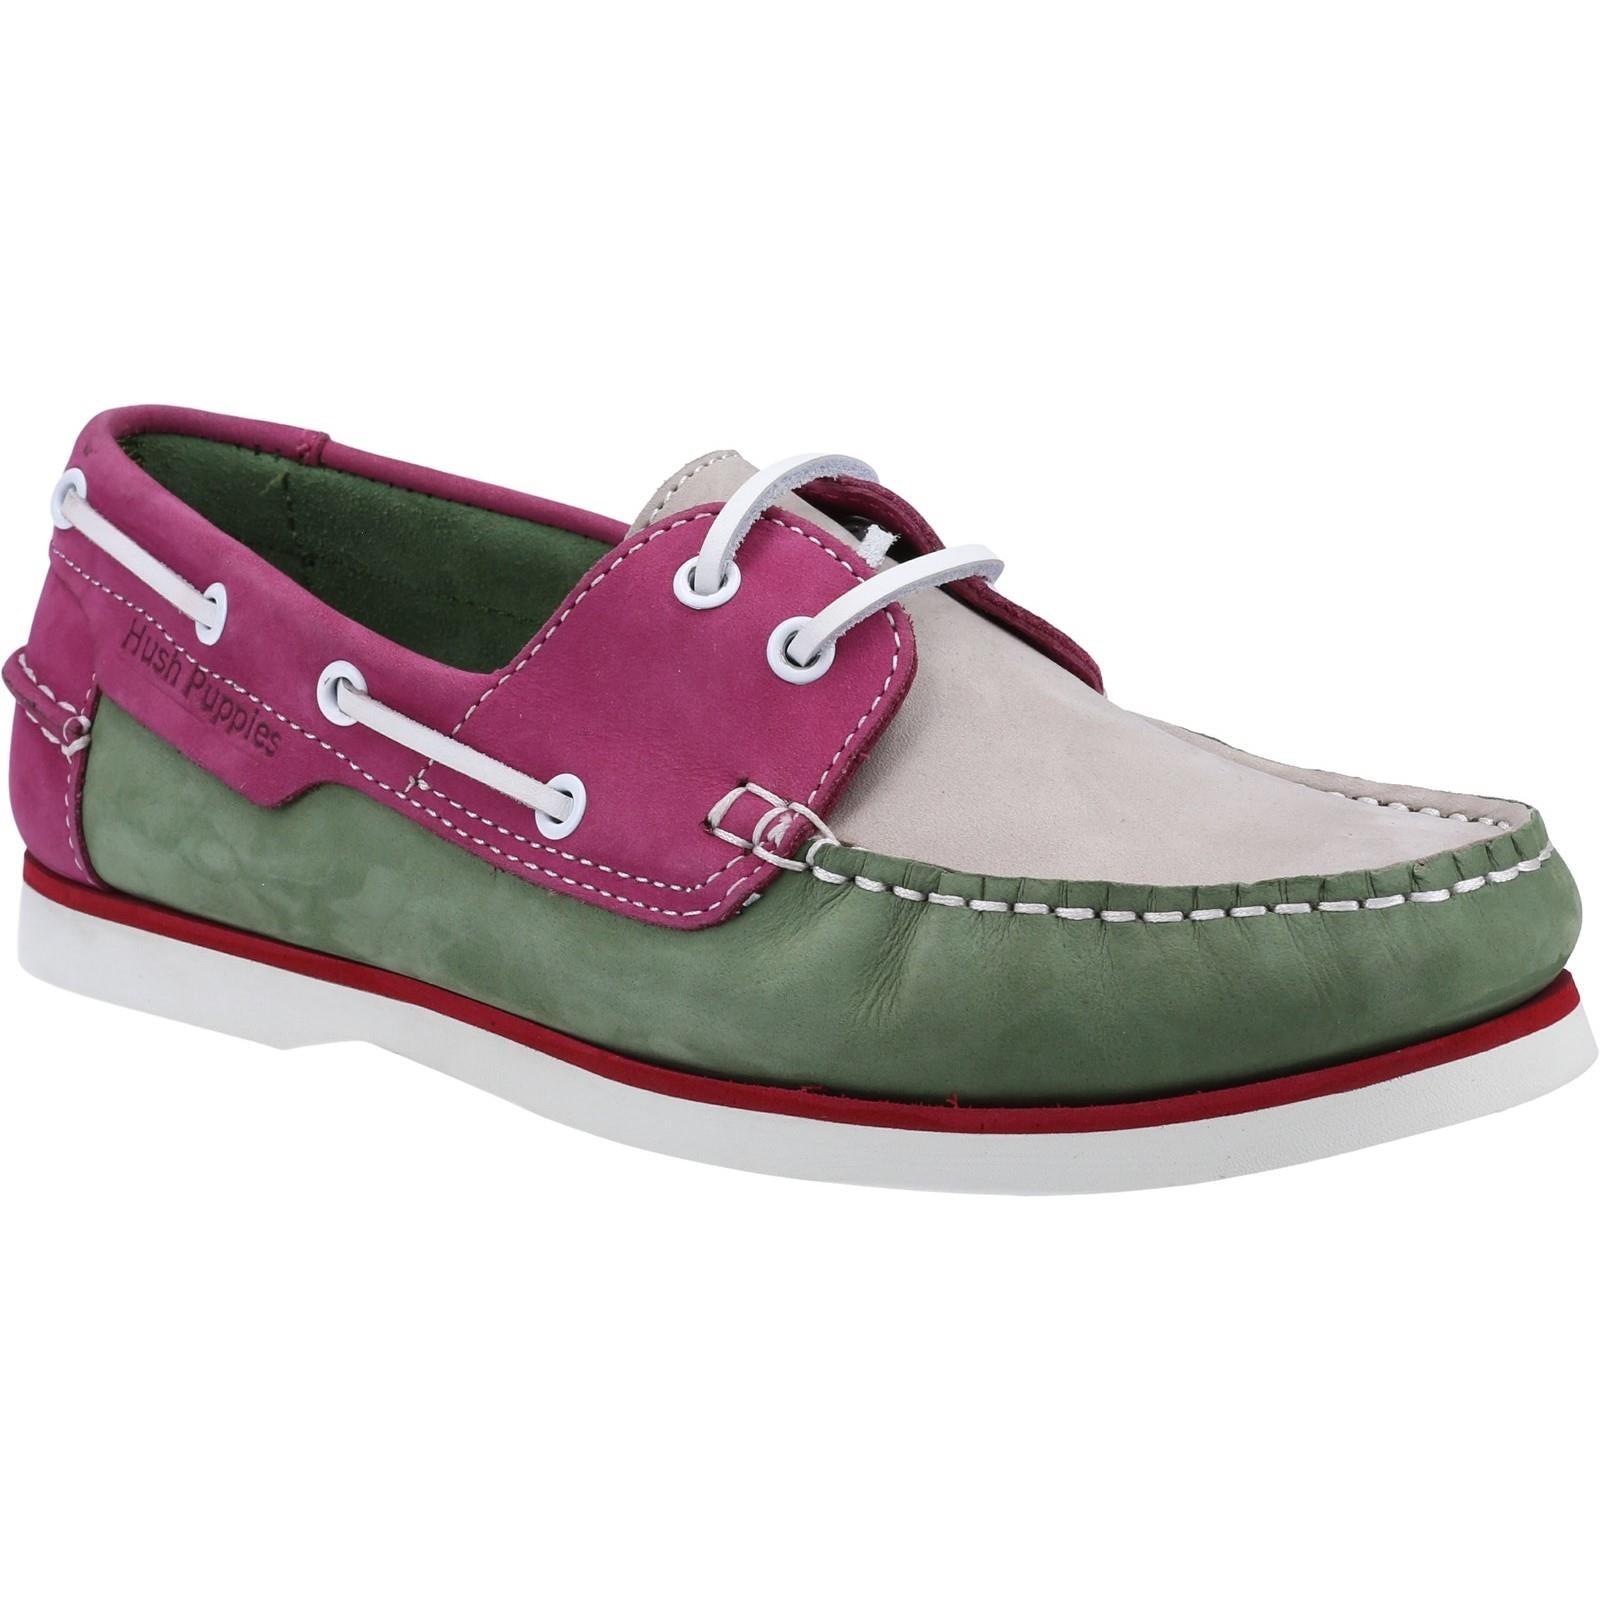 Hush Puppies Hattie green/pink/grey ladies summer memory foam deck boat shoes